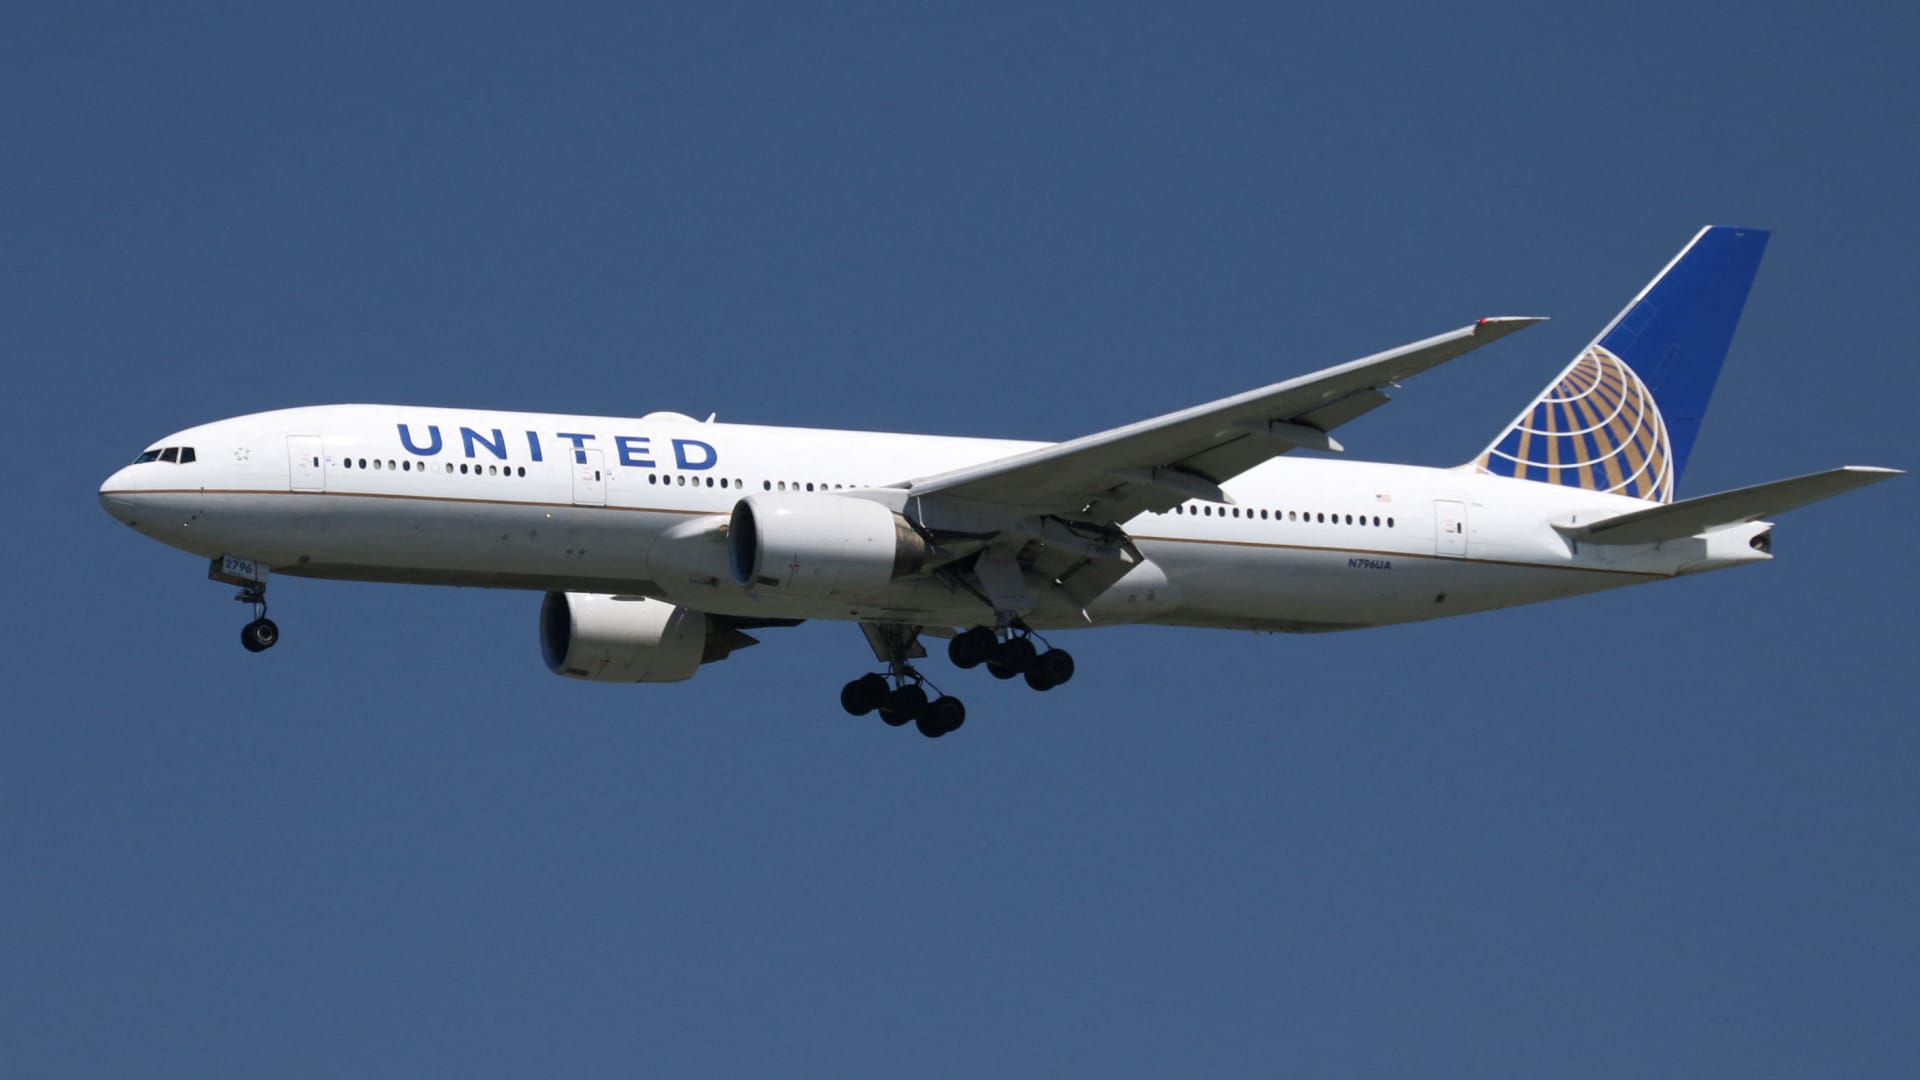 United plans to expand Australia, New Zealand flights 40% in bet on international travel rebound